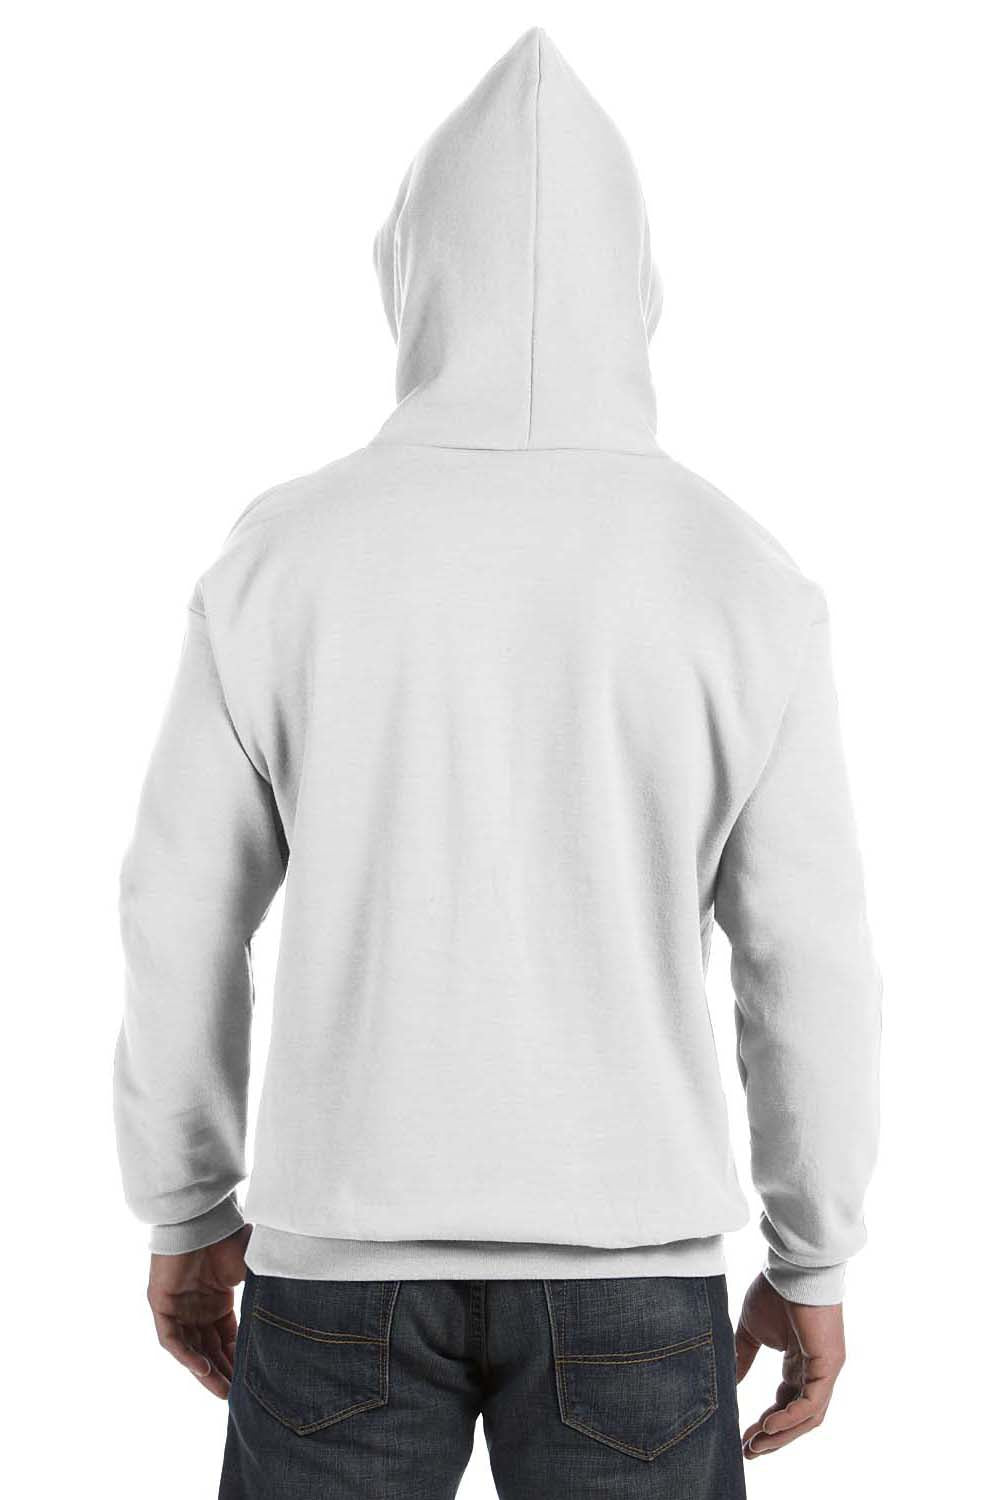 Hanes P170 Mens EcoSmart Print Pro XP Hooded Sweatshirt Hoodie White Back